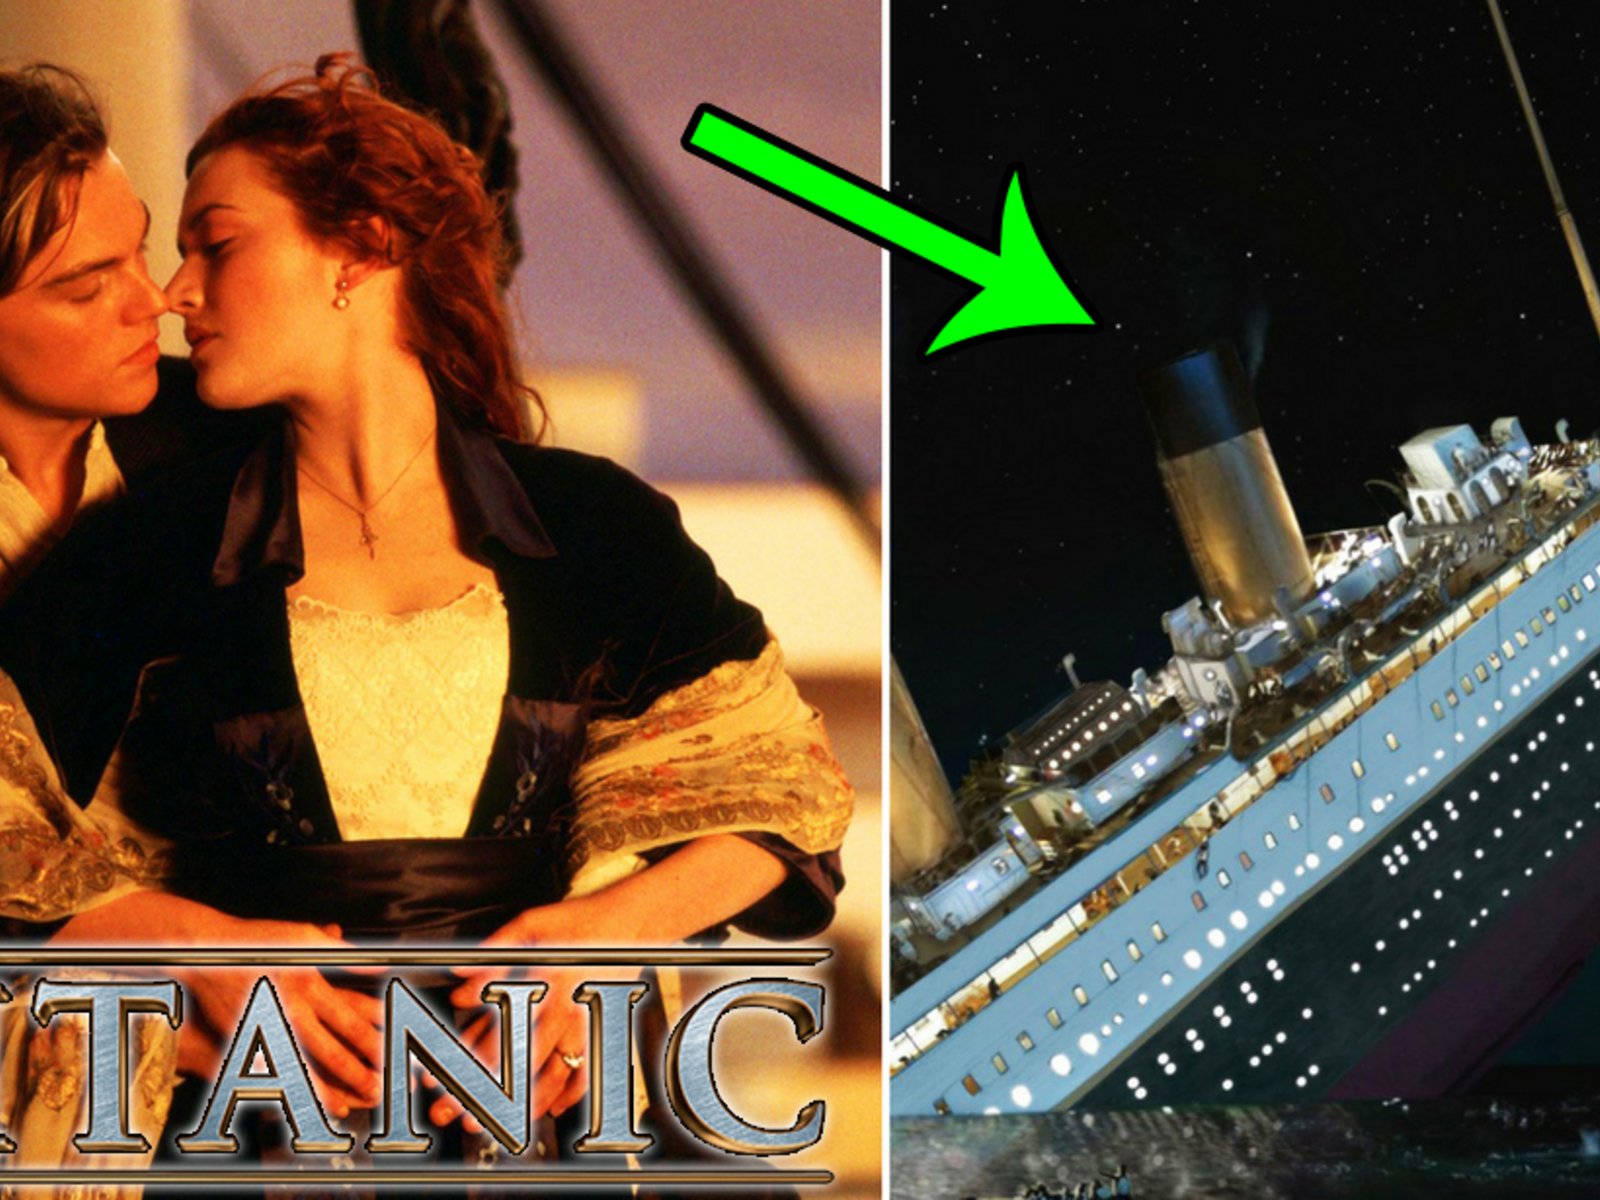 Ammazza! 36+  Verità che devi conoscere  Titanic? Learn surprising facts that tell more of the story of the titanic and her fateful maiden voyage.